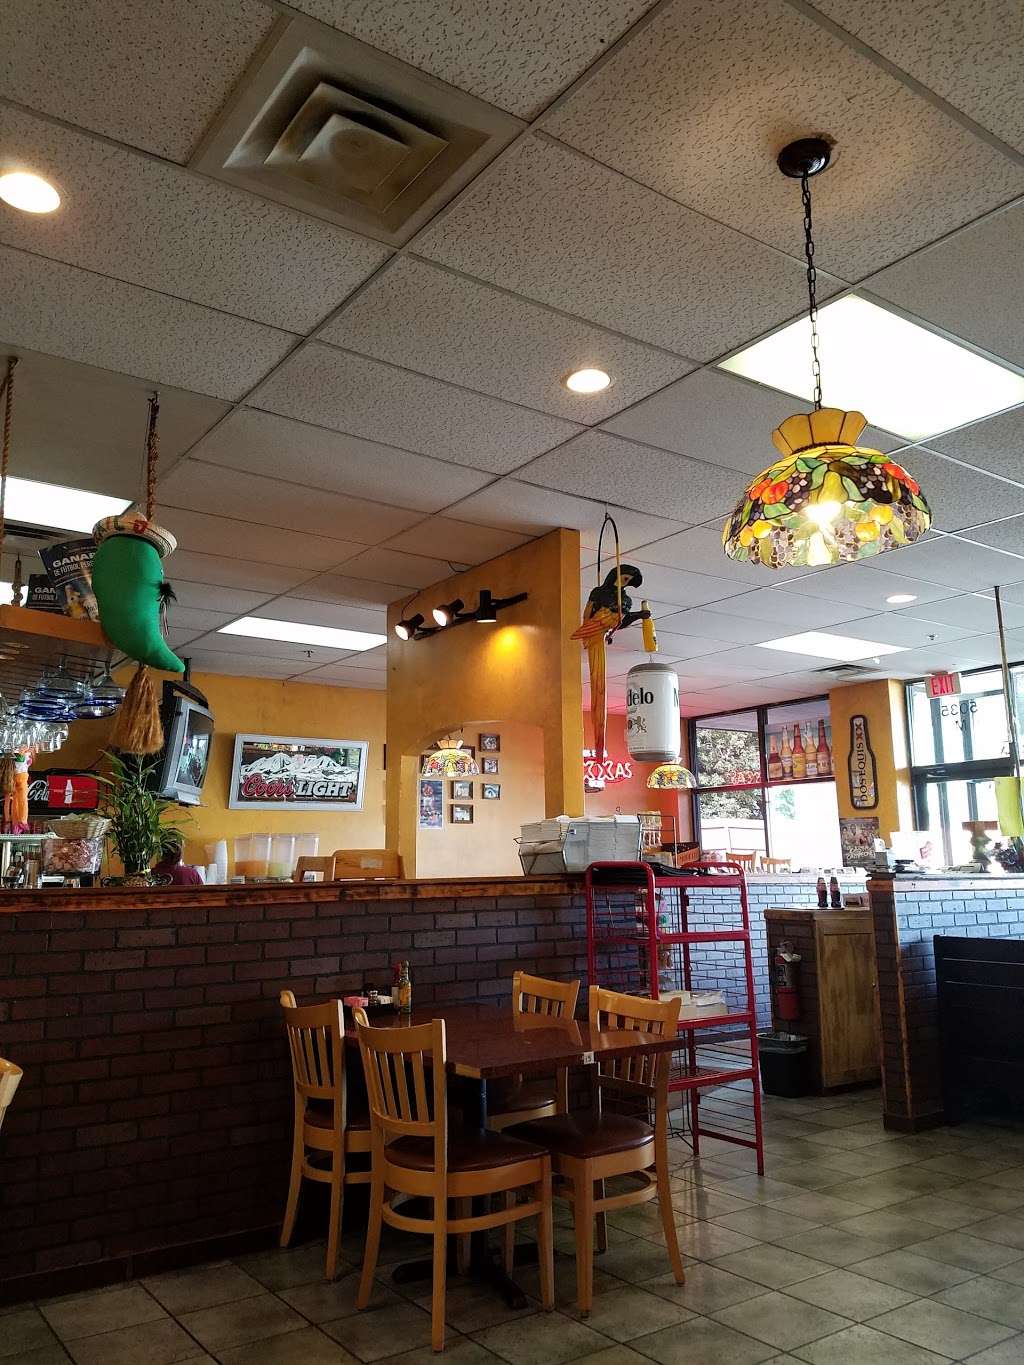 El Hidalguense Mexican Restaurant | 5035 W 71st St, Indianapolis, IN 46268, USA | Phone: (317) 328-0743